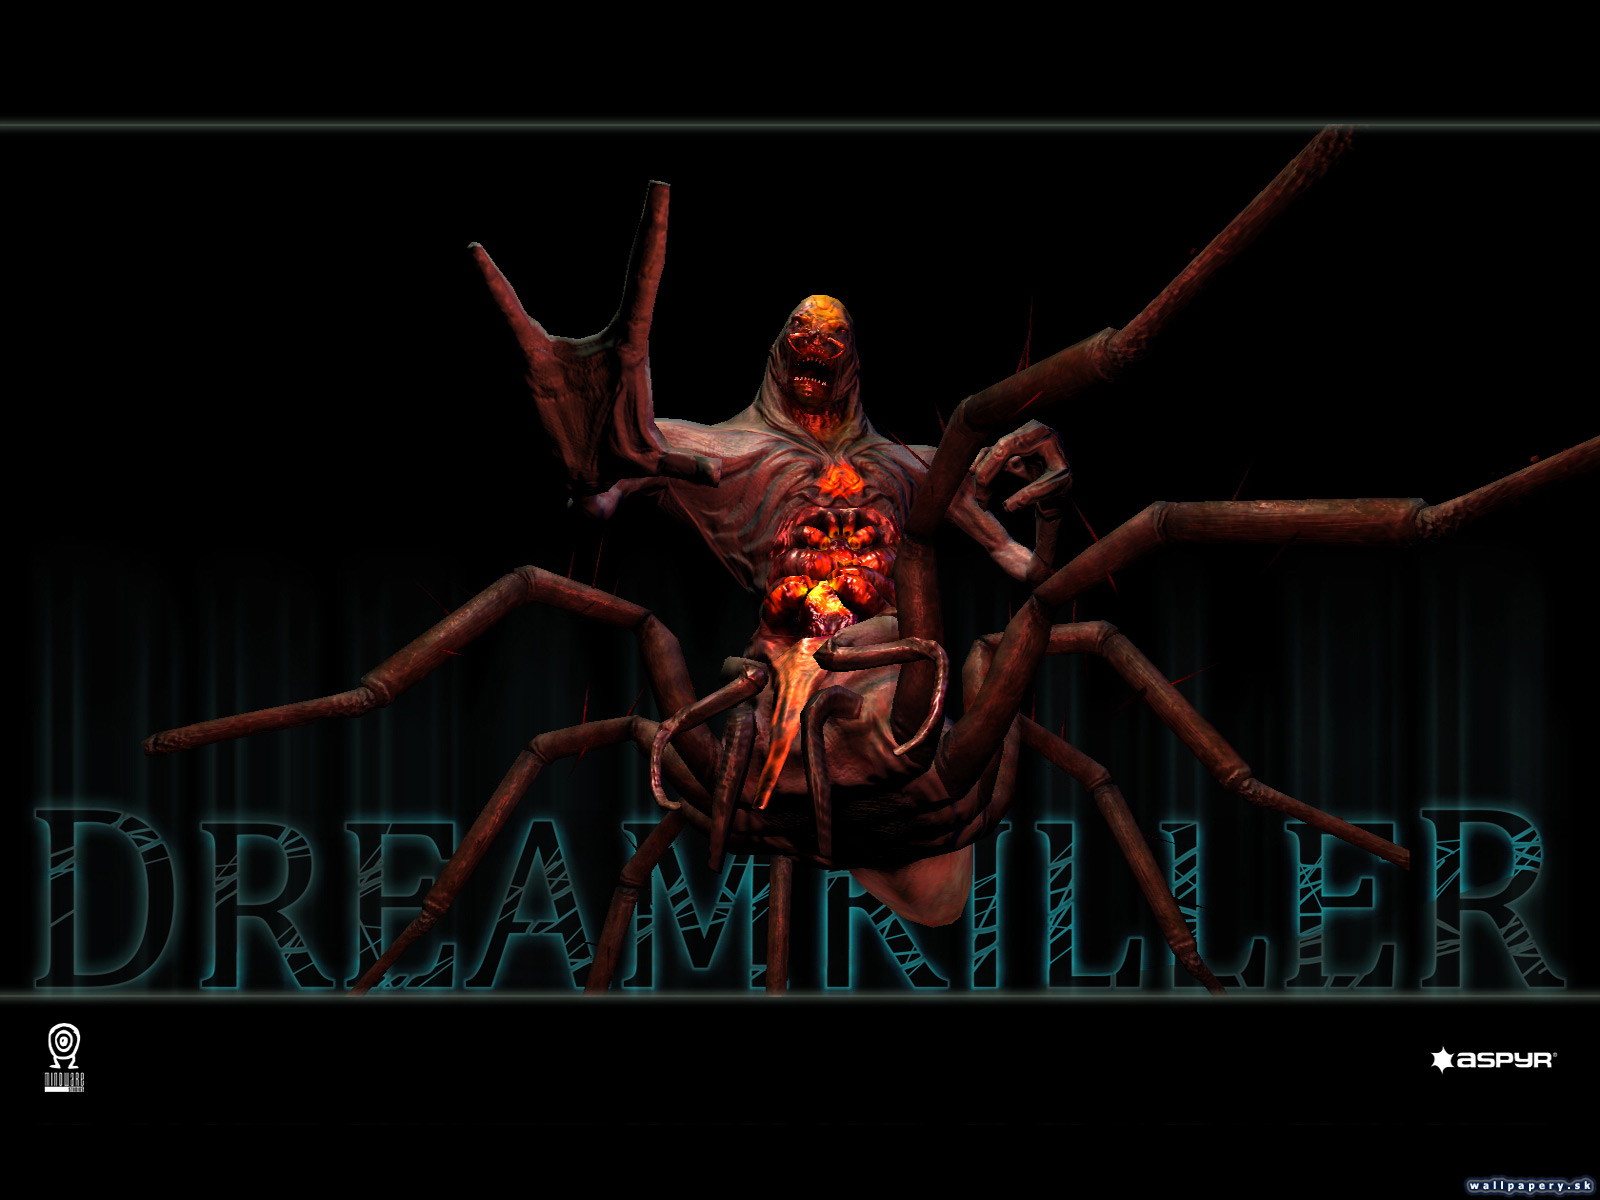 Dreamkiller - wallpaper 8